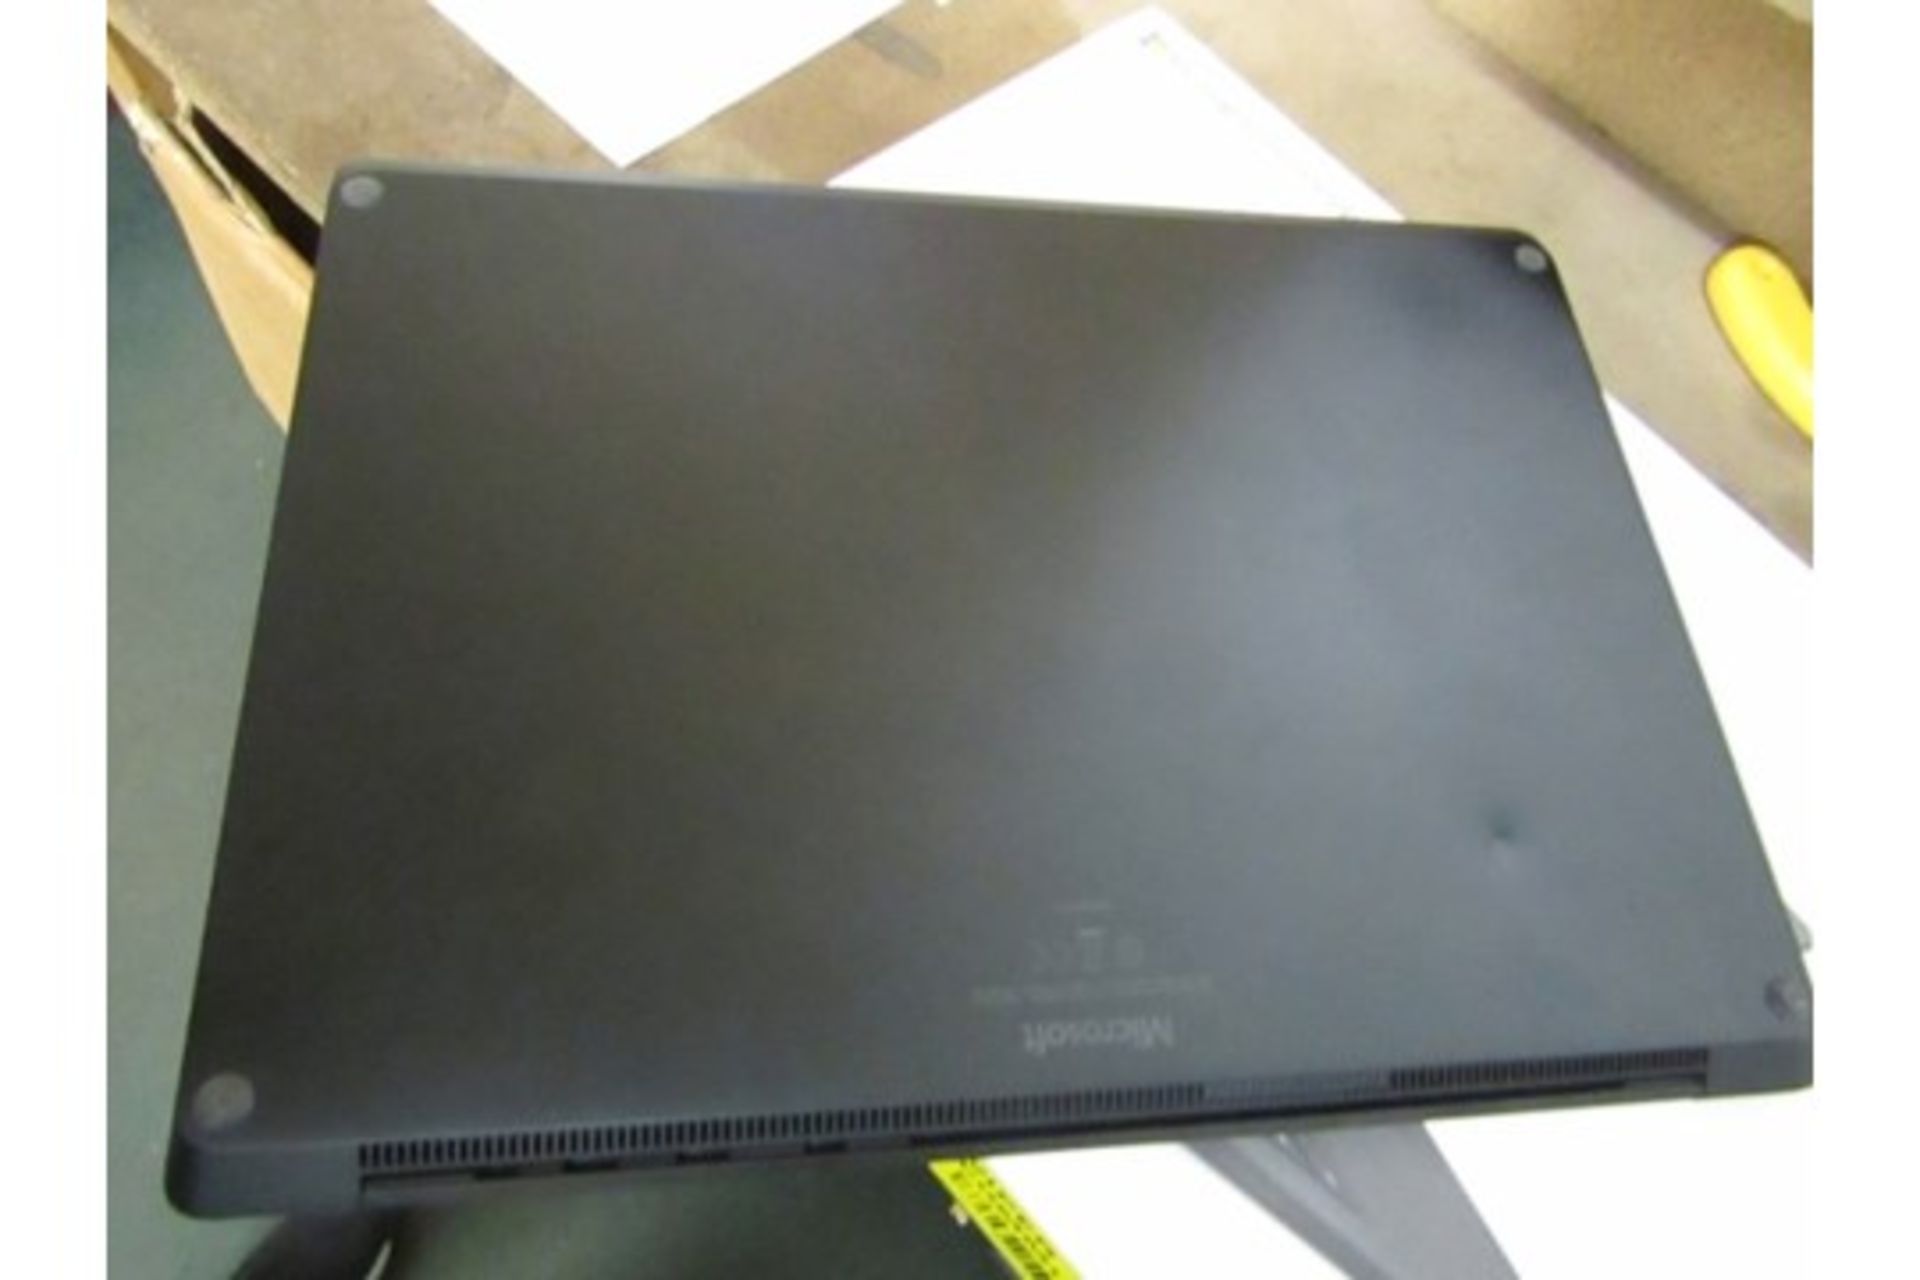 NO VAT ON THE HAMMER! Microsoft Surface Pro 2 Laptop model 1769, 8th Generation i7 processor, - Image 5 of 13